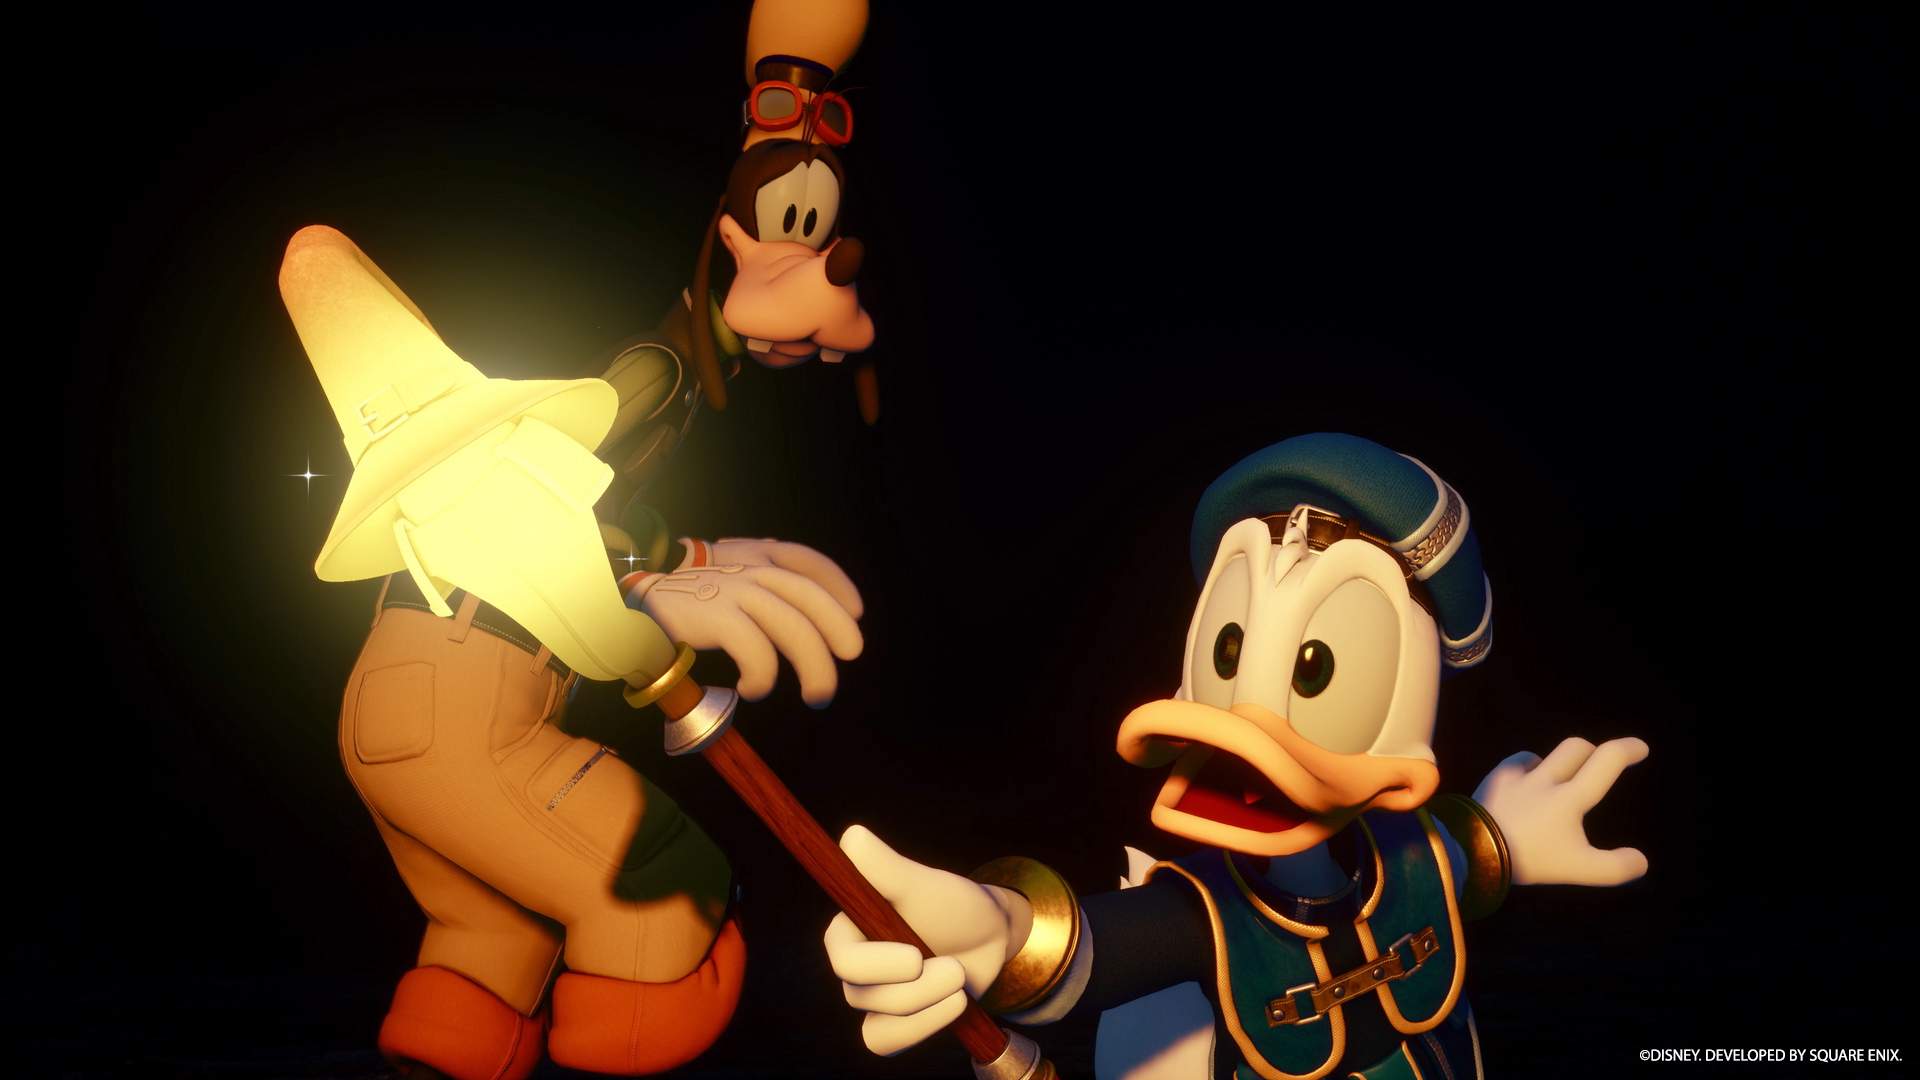 Donald and Goofy in KINGDOM HEARTS IV